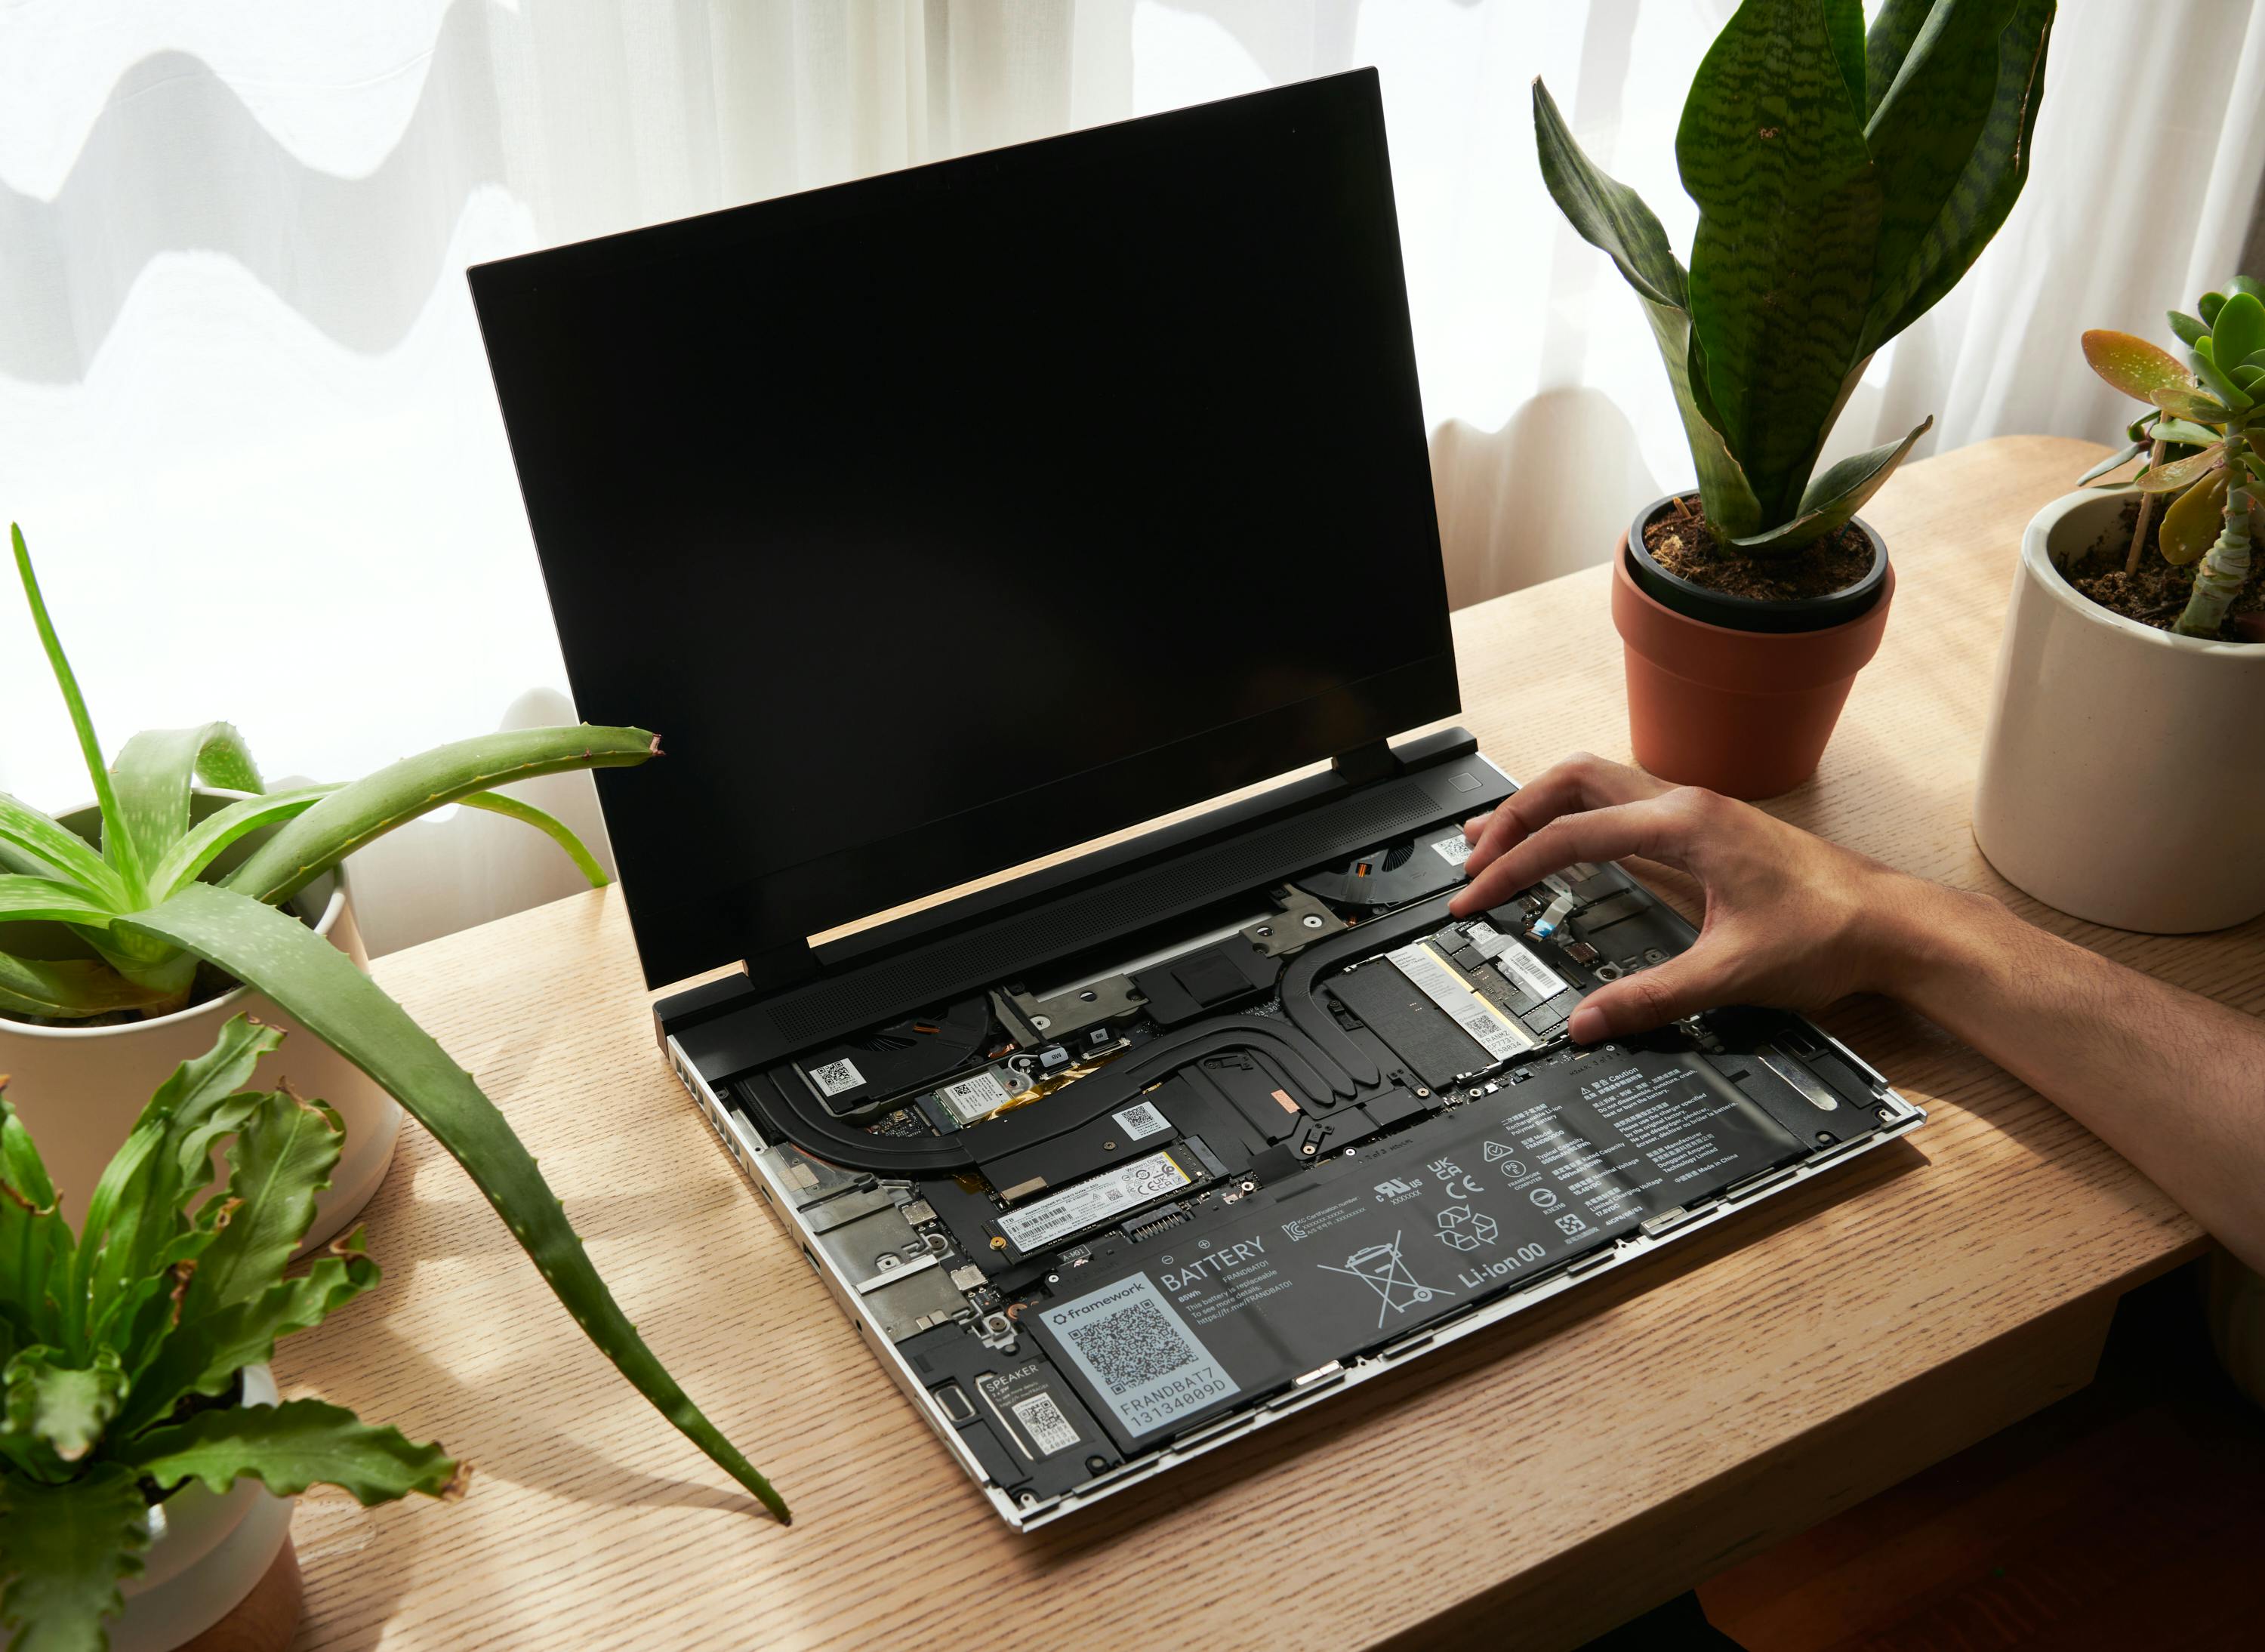 Setting up a Framework Laptop